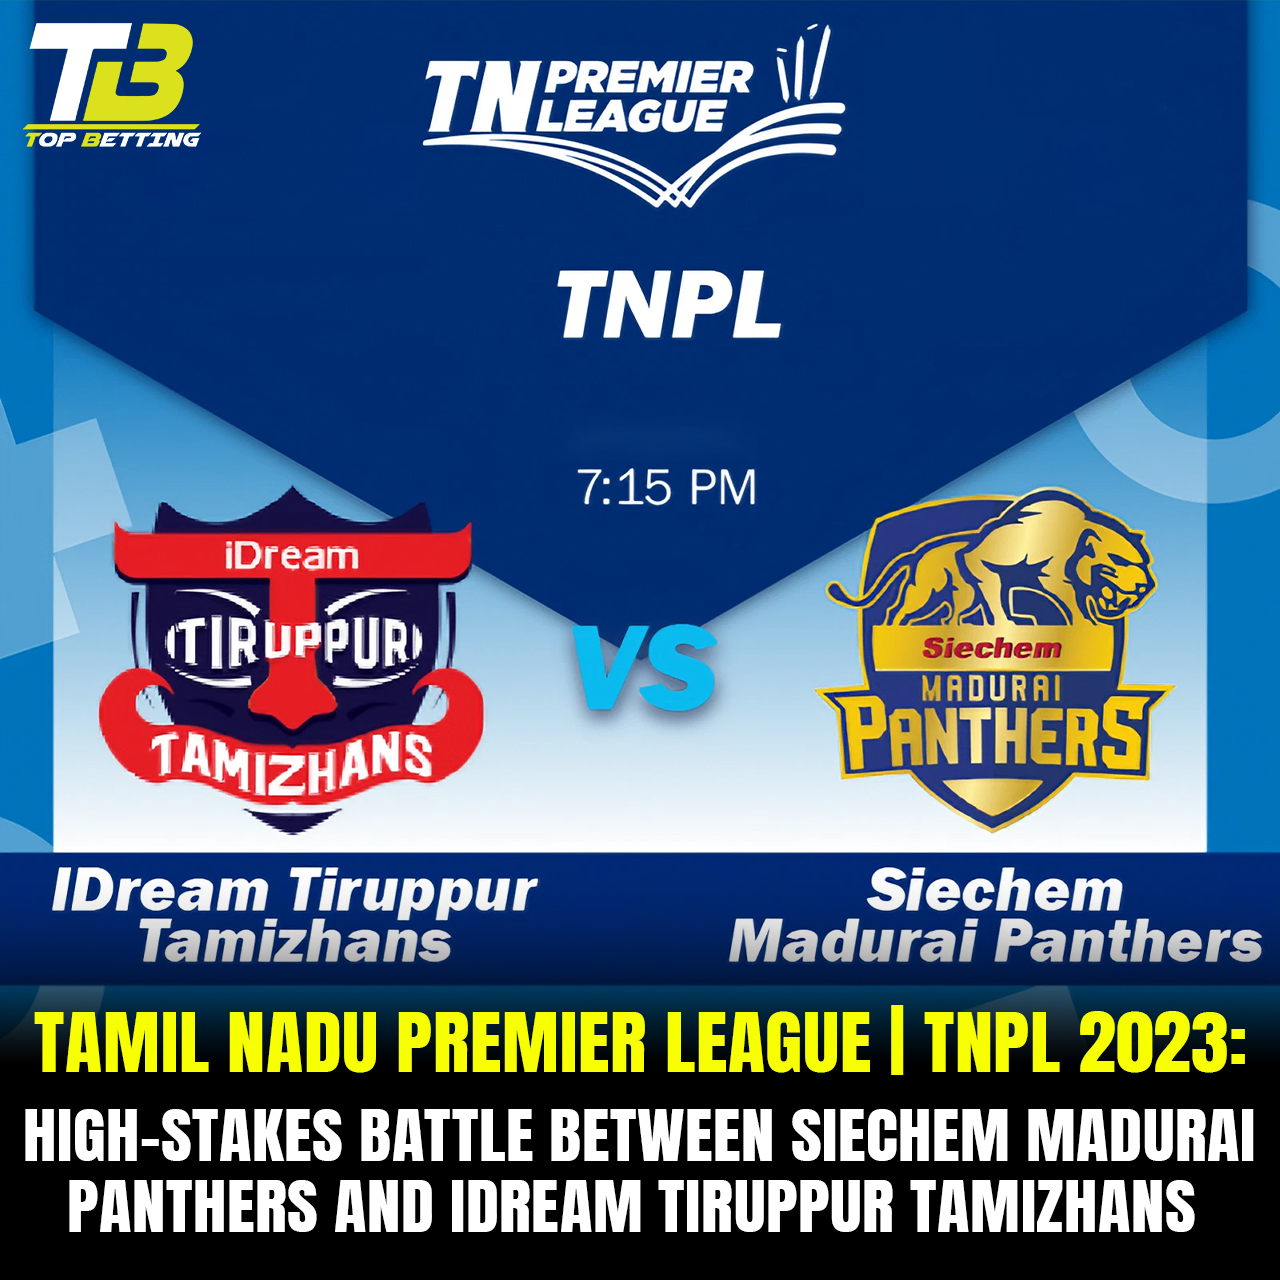 Tamil Nadu Premier League | TNPL 2023: High-Stakes Battle Between Siechem Madurai Panthers and IDream Tiruppur Tamizhans